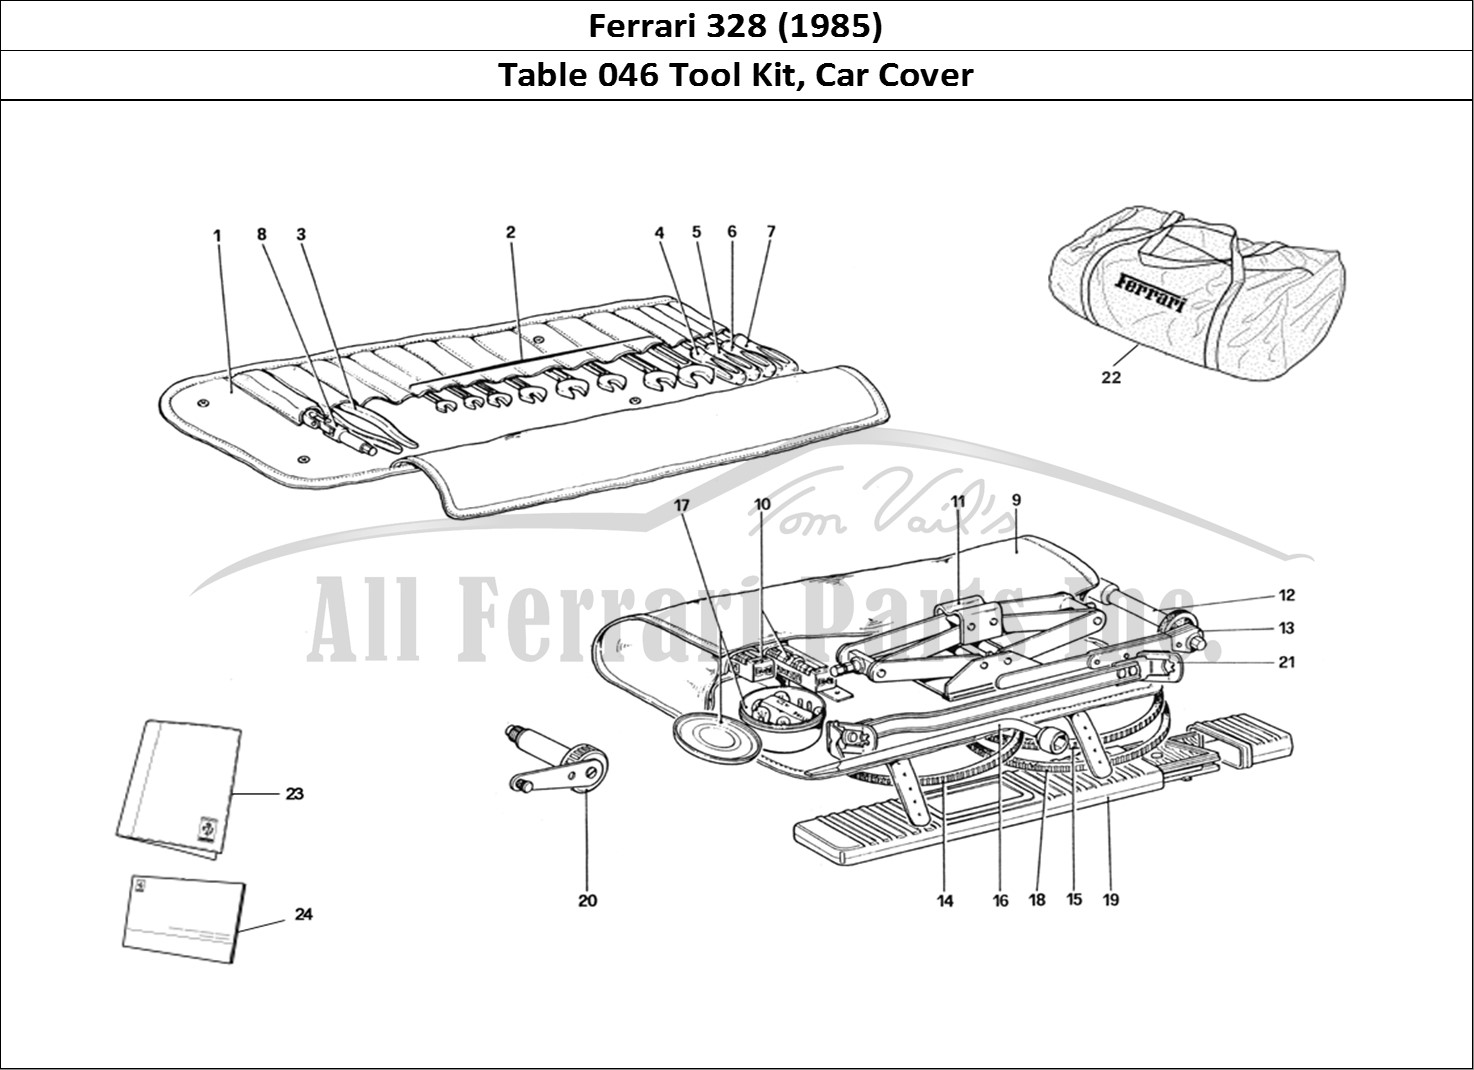 Ferrari Parts Ferrari 328 (1985) Page 046 Tool Kit & Car Cover